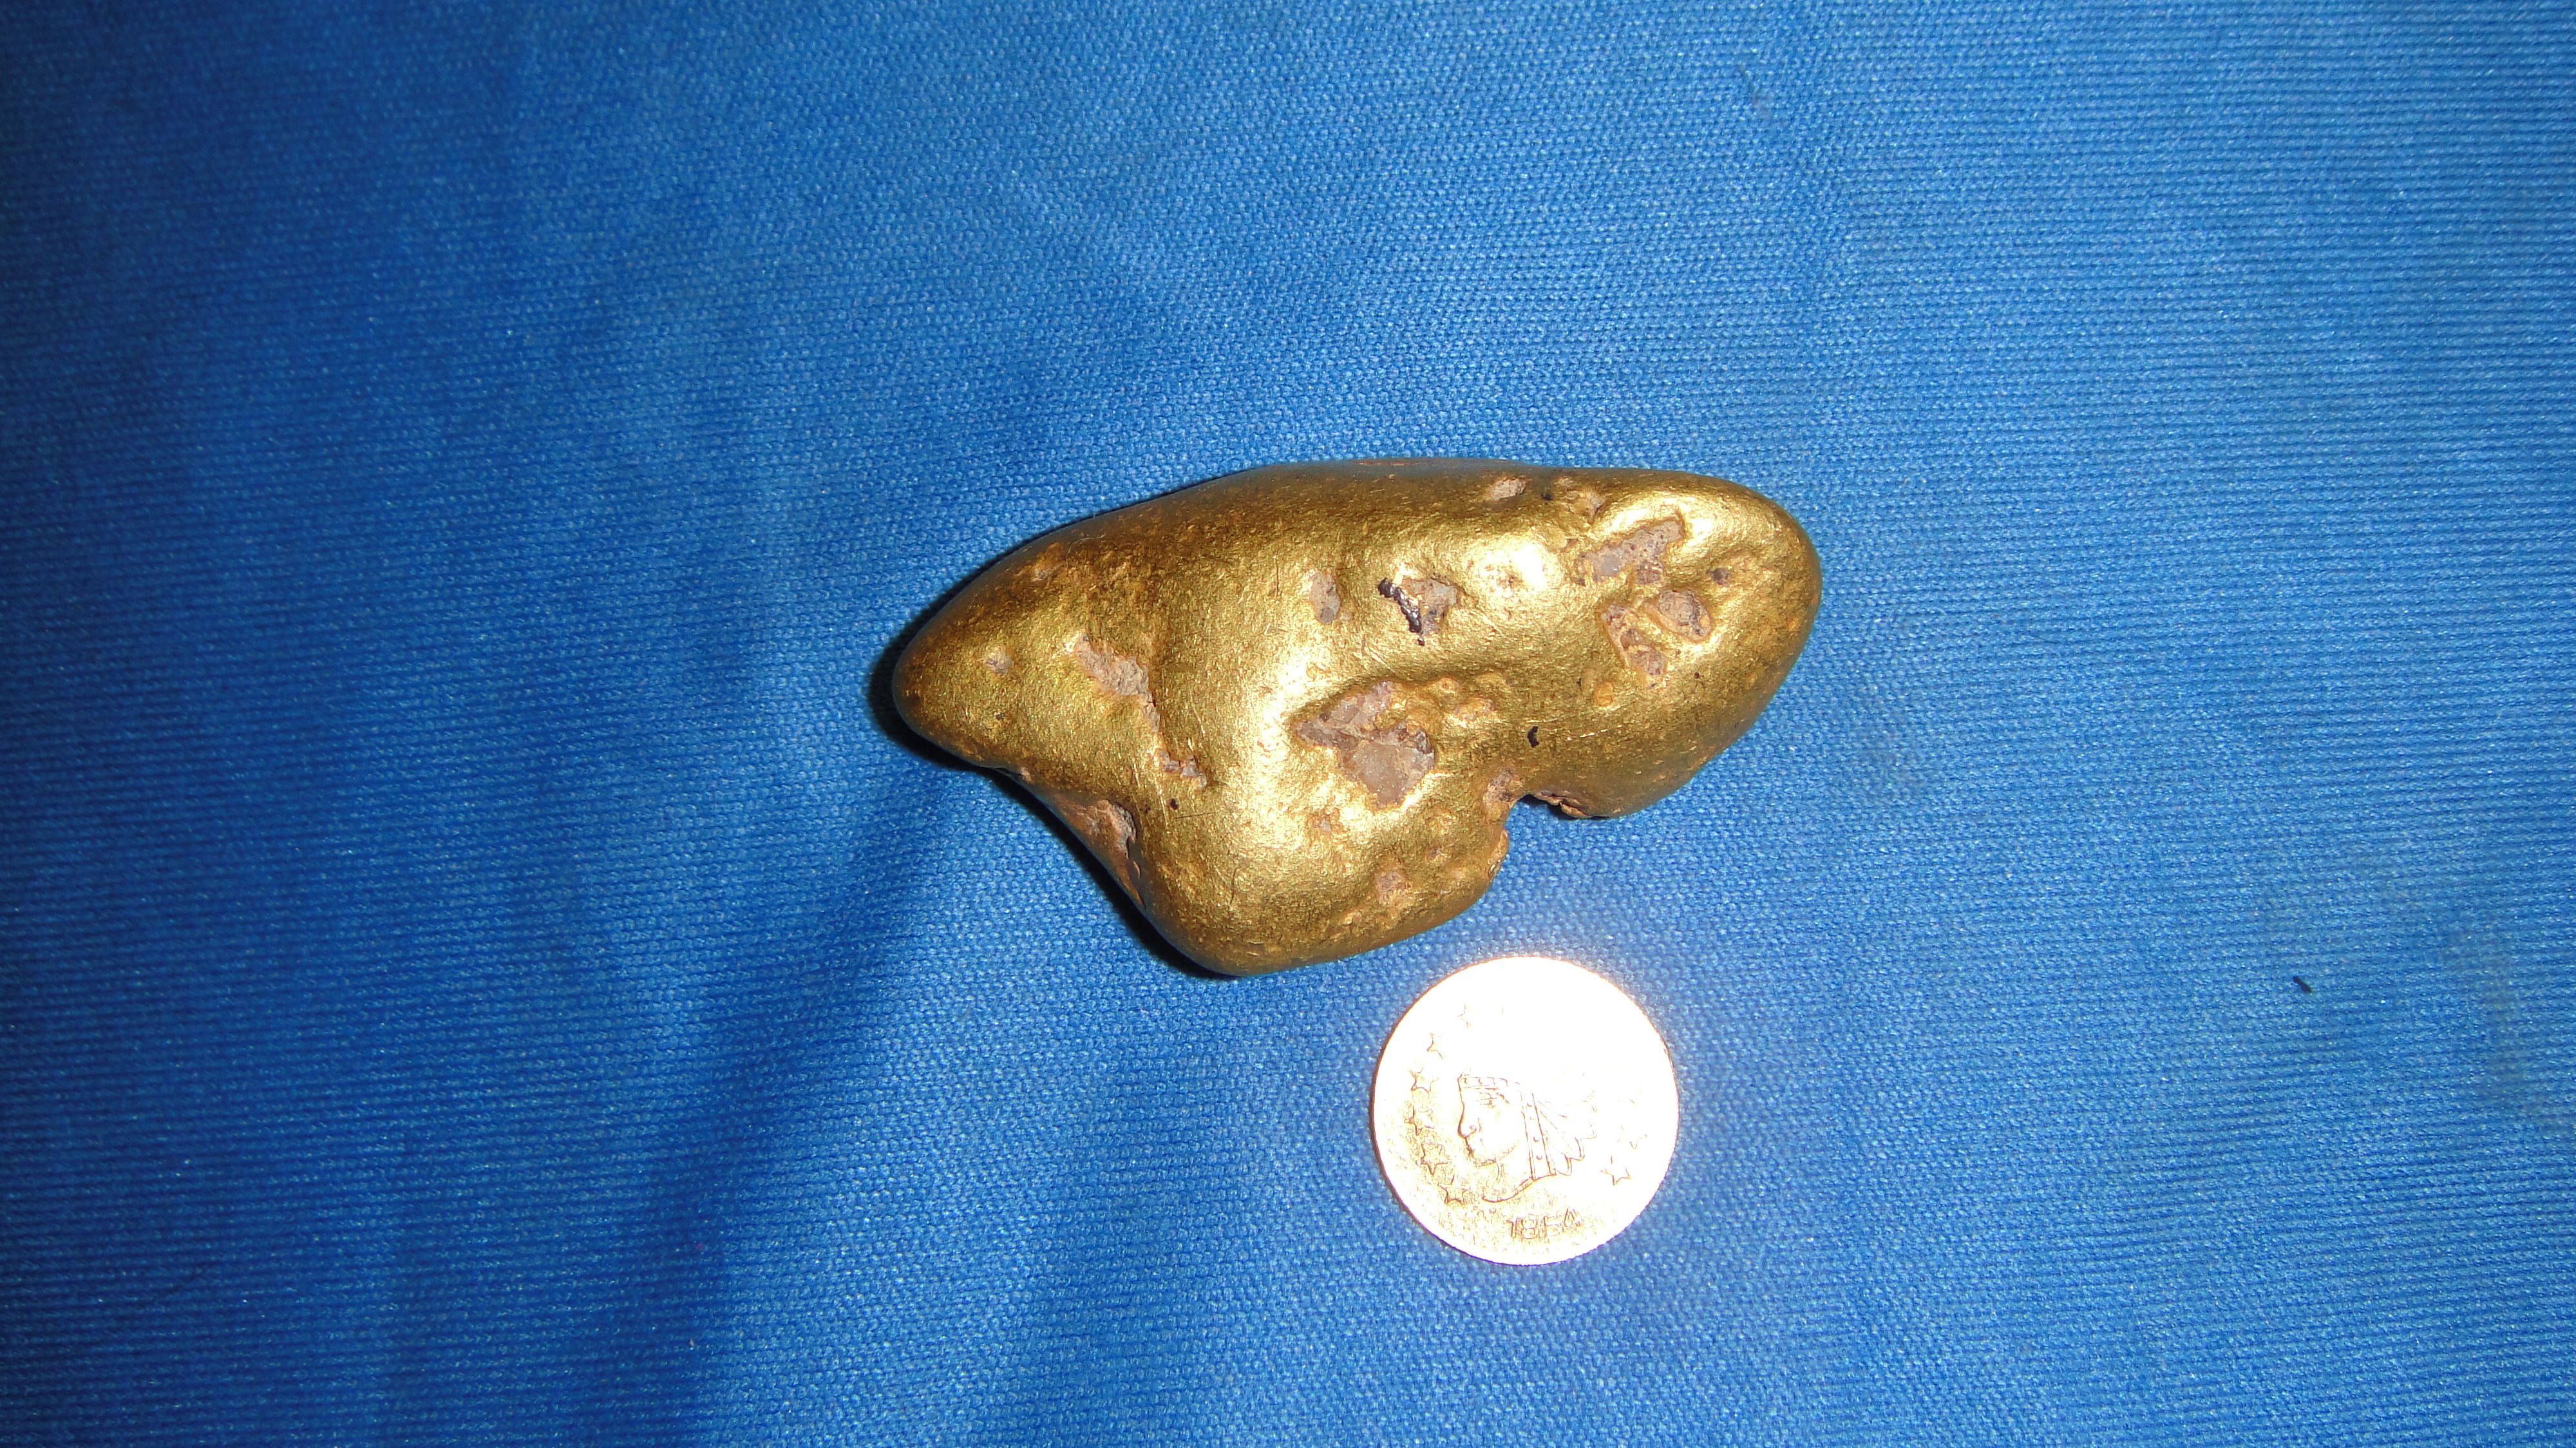 1½oz nugget from North Yuba